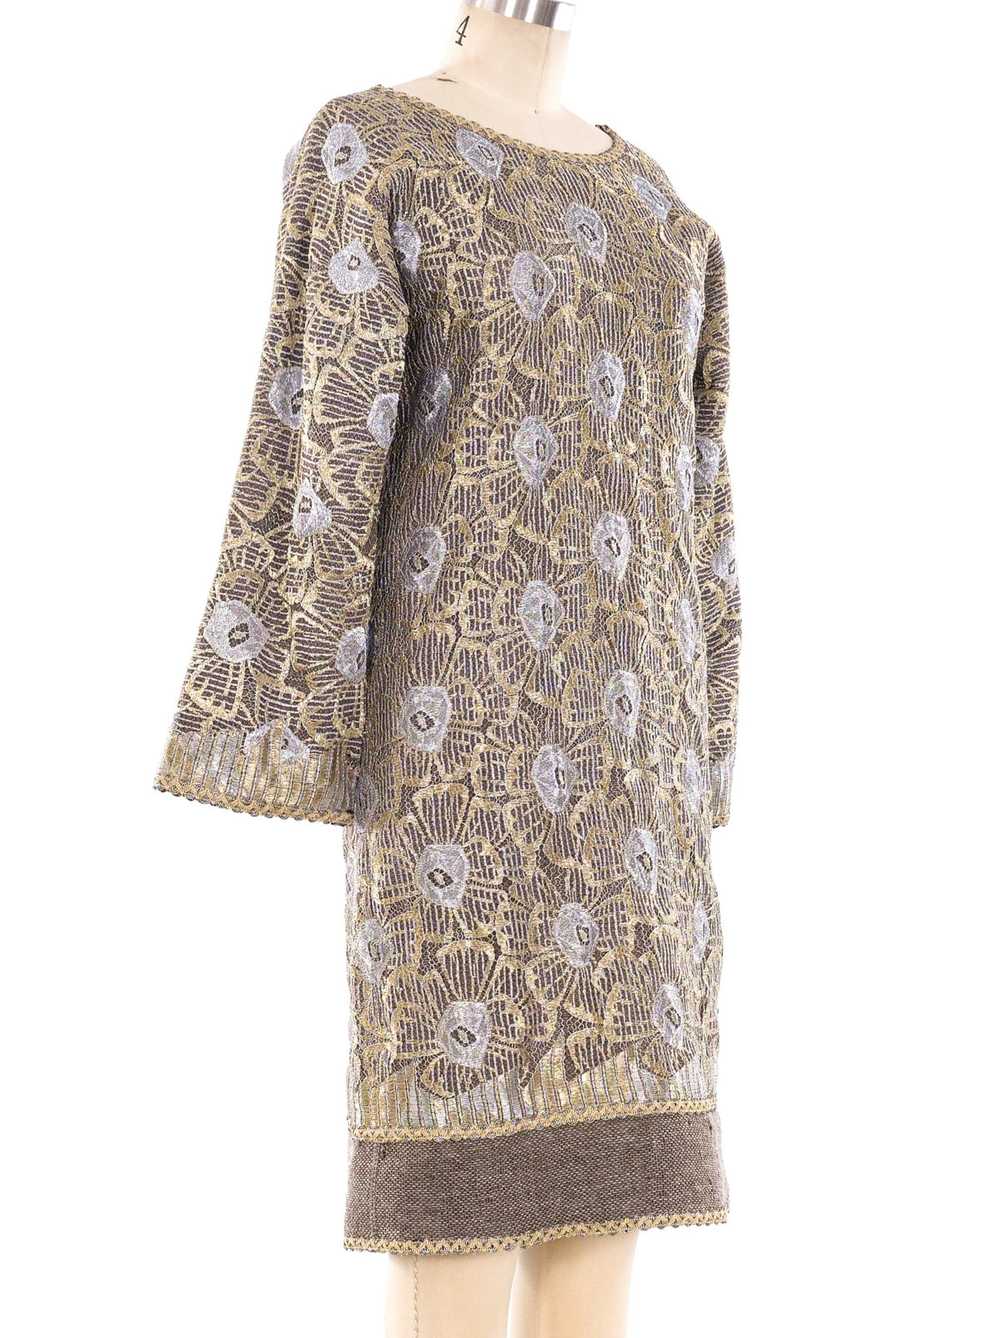 Geoffrey Beene Metallic Floral Embroidered Dress - image 3